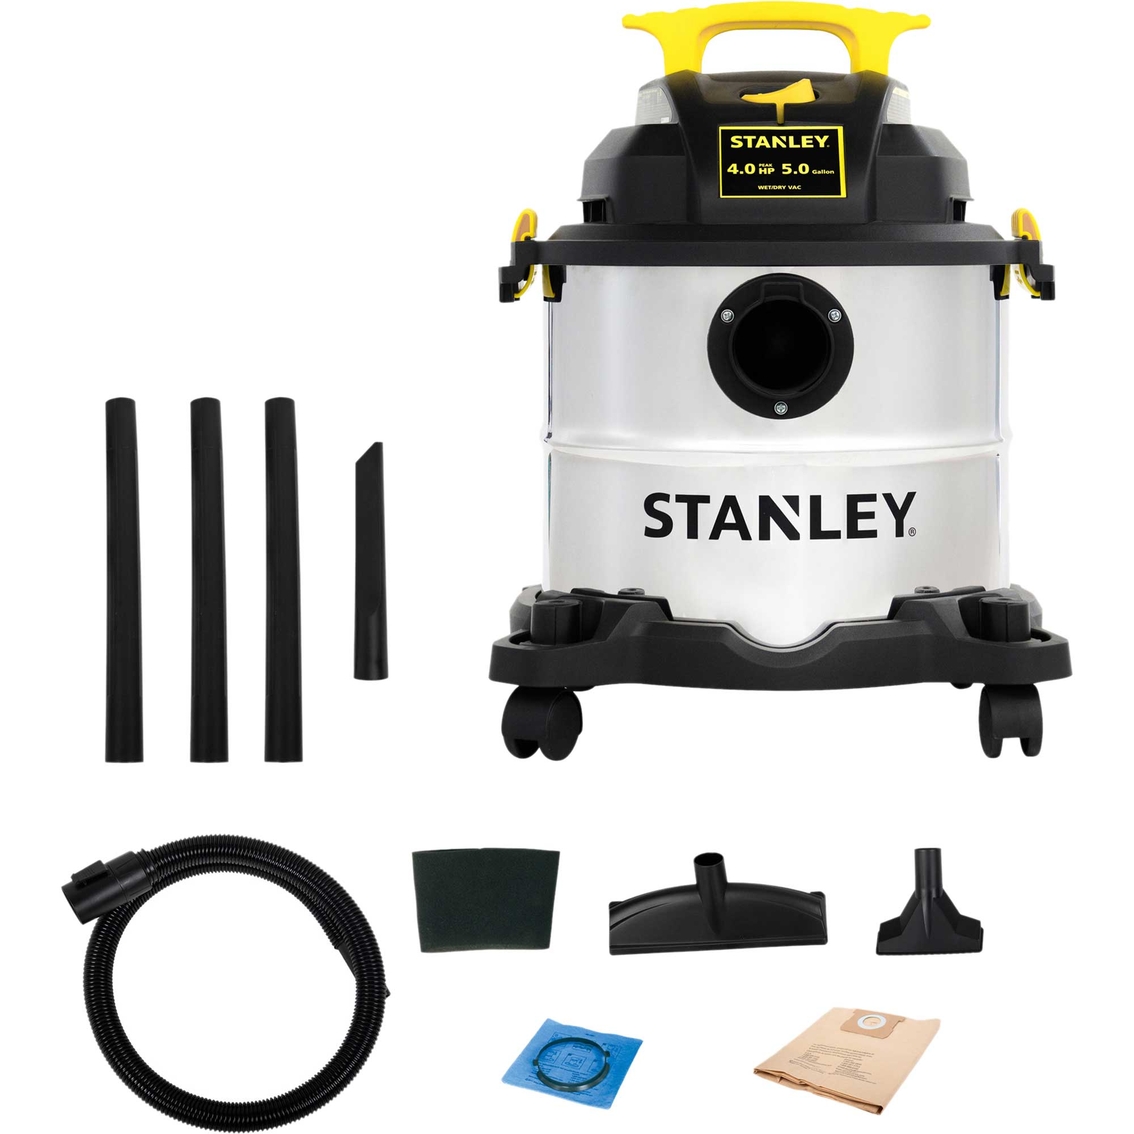 Stanley Stainless Steel 5 gal. 4 Horsepower Wet/Dry Vacuum - Image 4 of 5